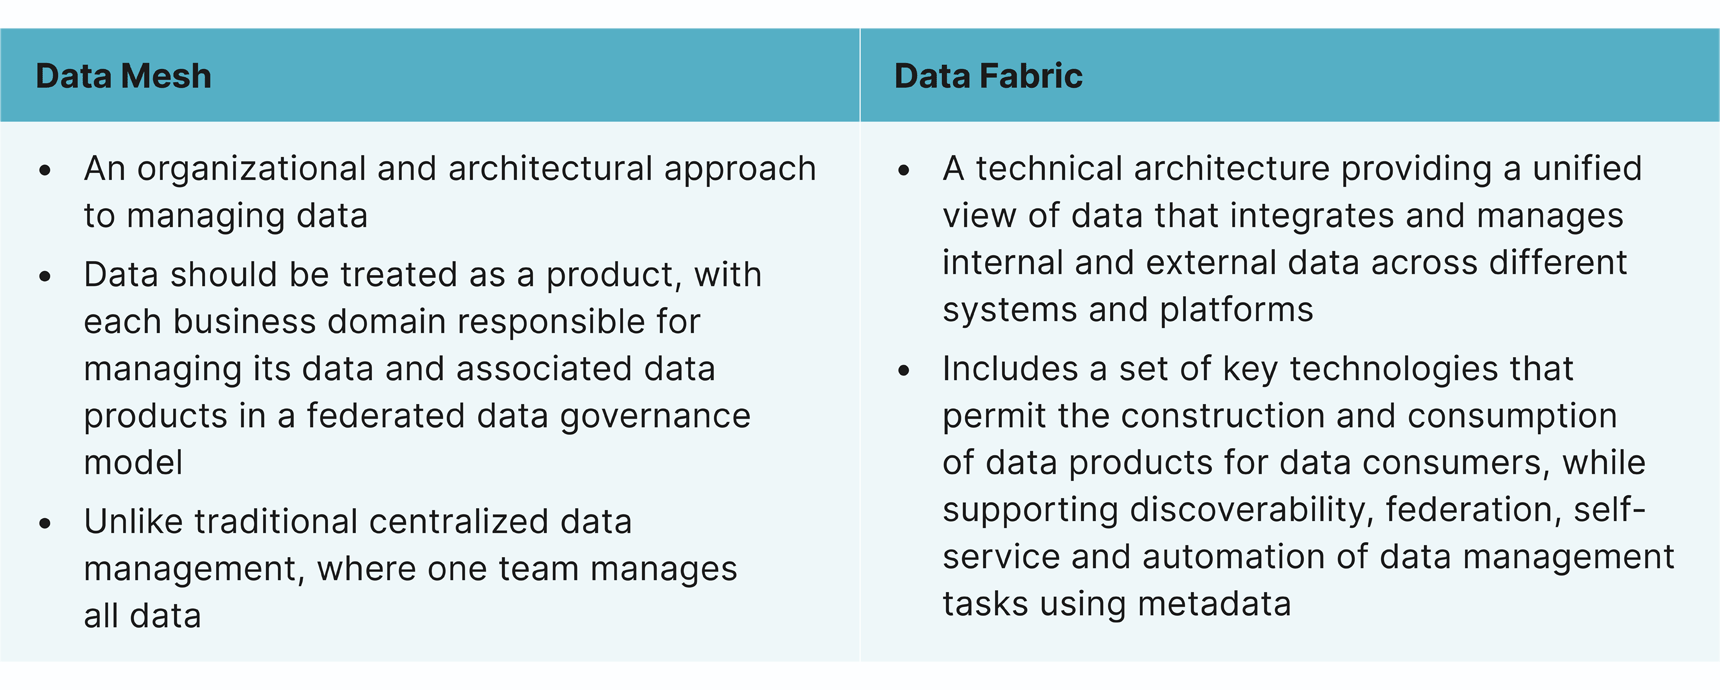 A chart describing the key aspects of Data Mesh vs Data Fabric